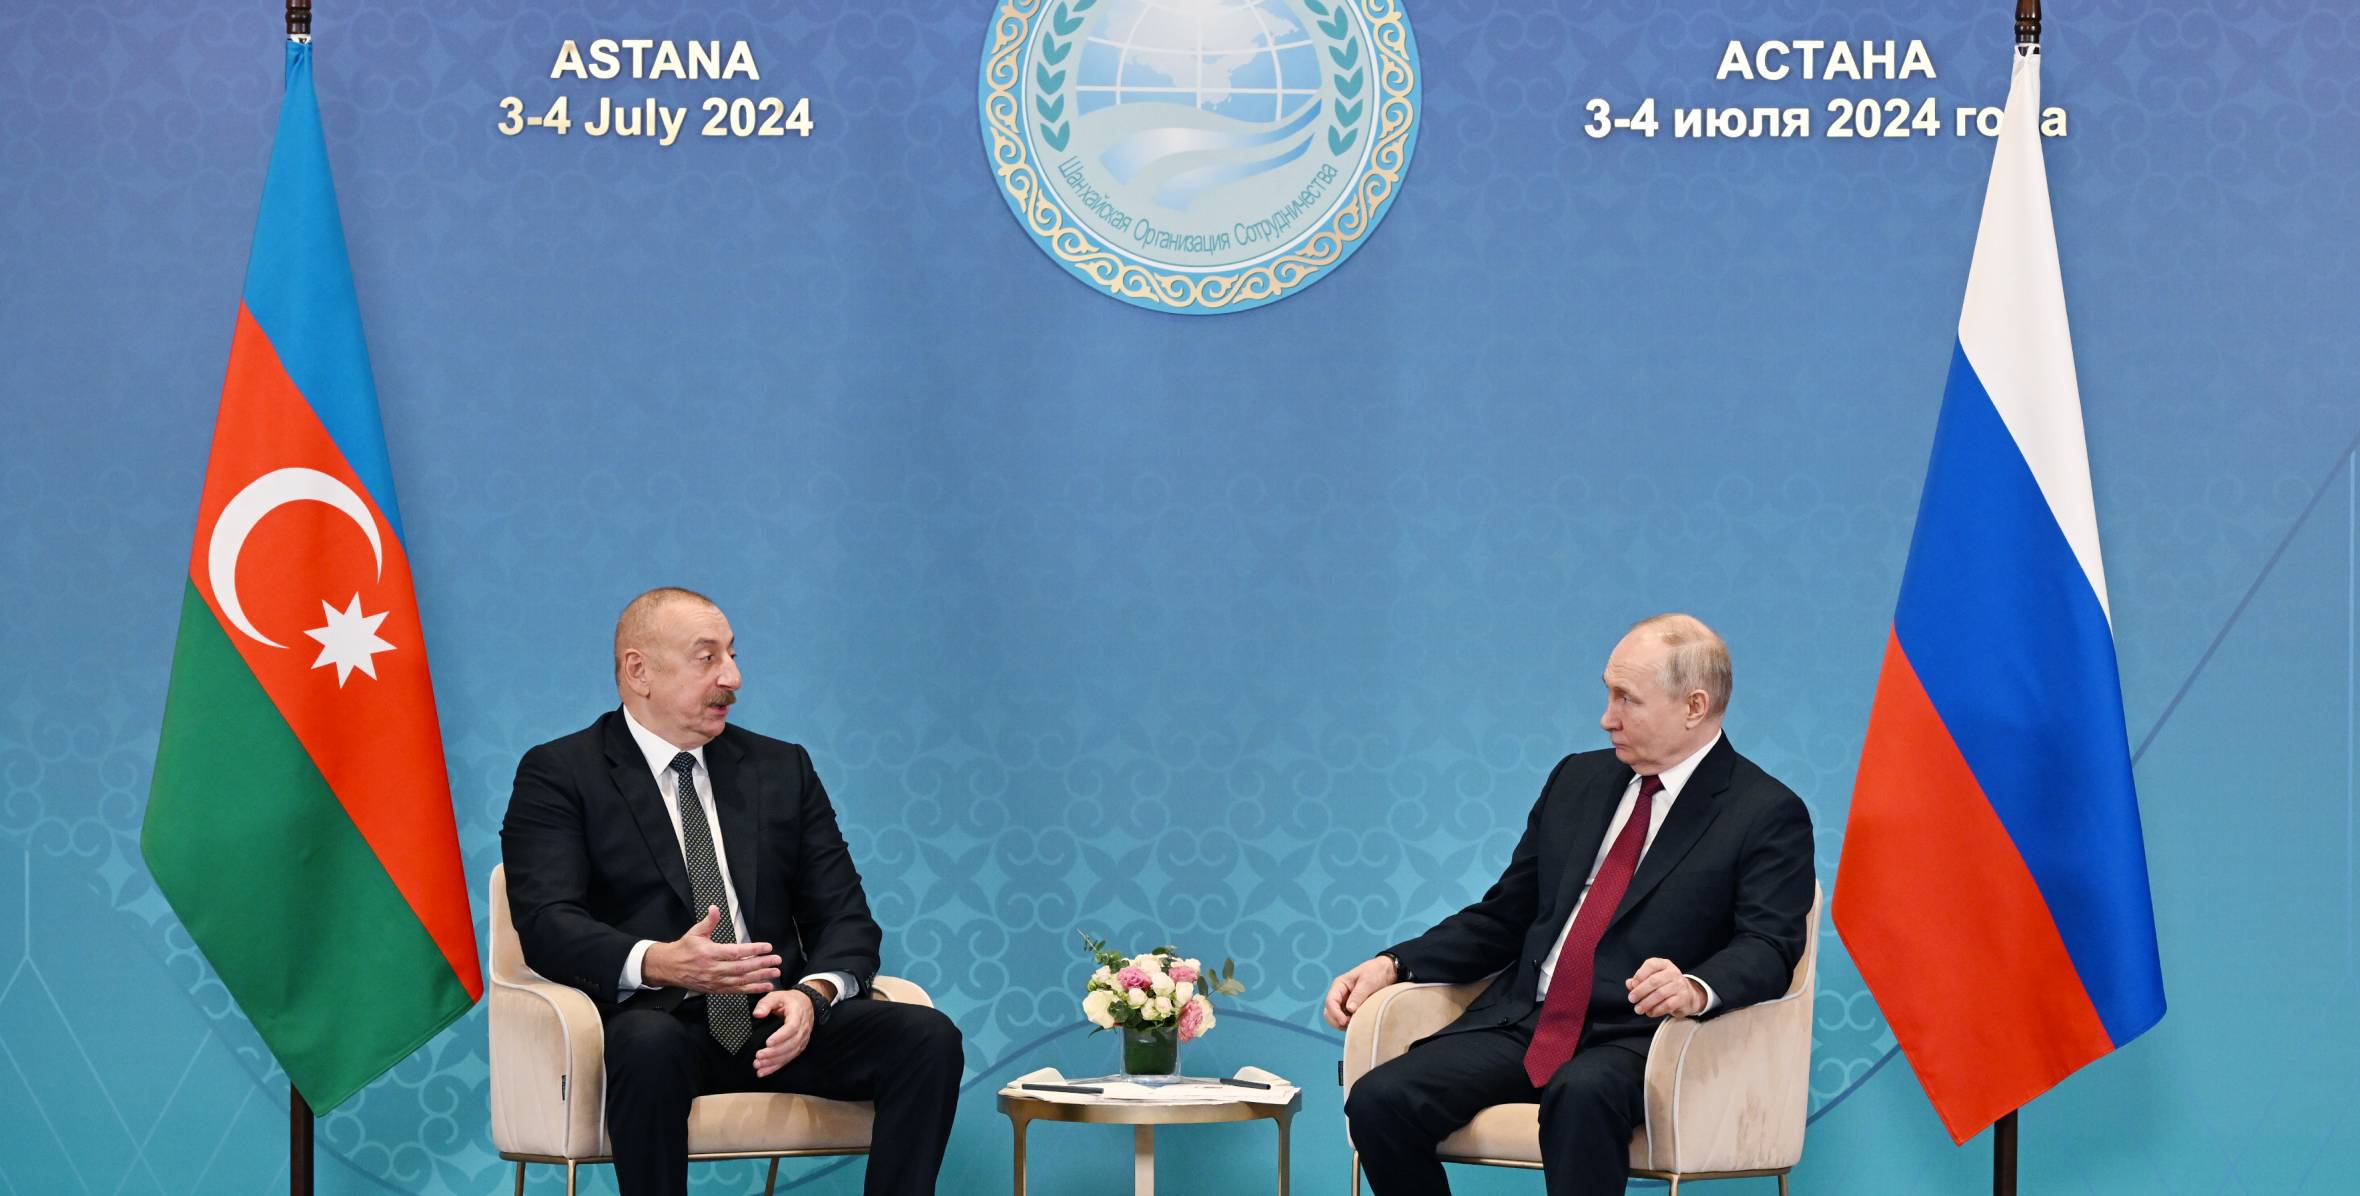 Ilham Aliyev met with Russian President Vladimir Putin in Astana